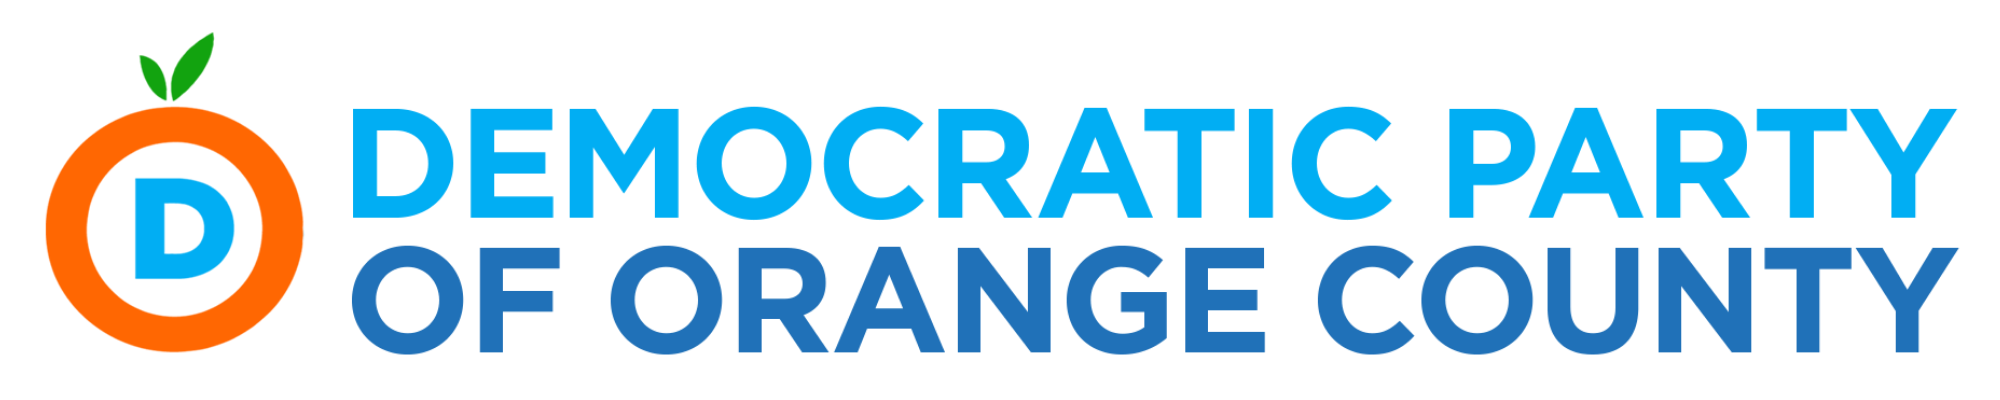 Democratic Party of Orange County, California